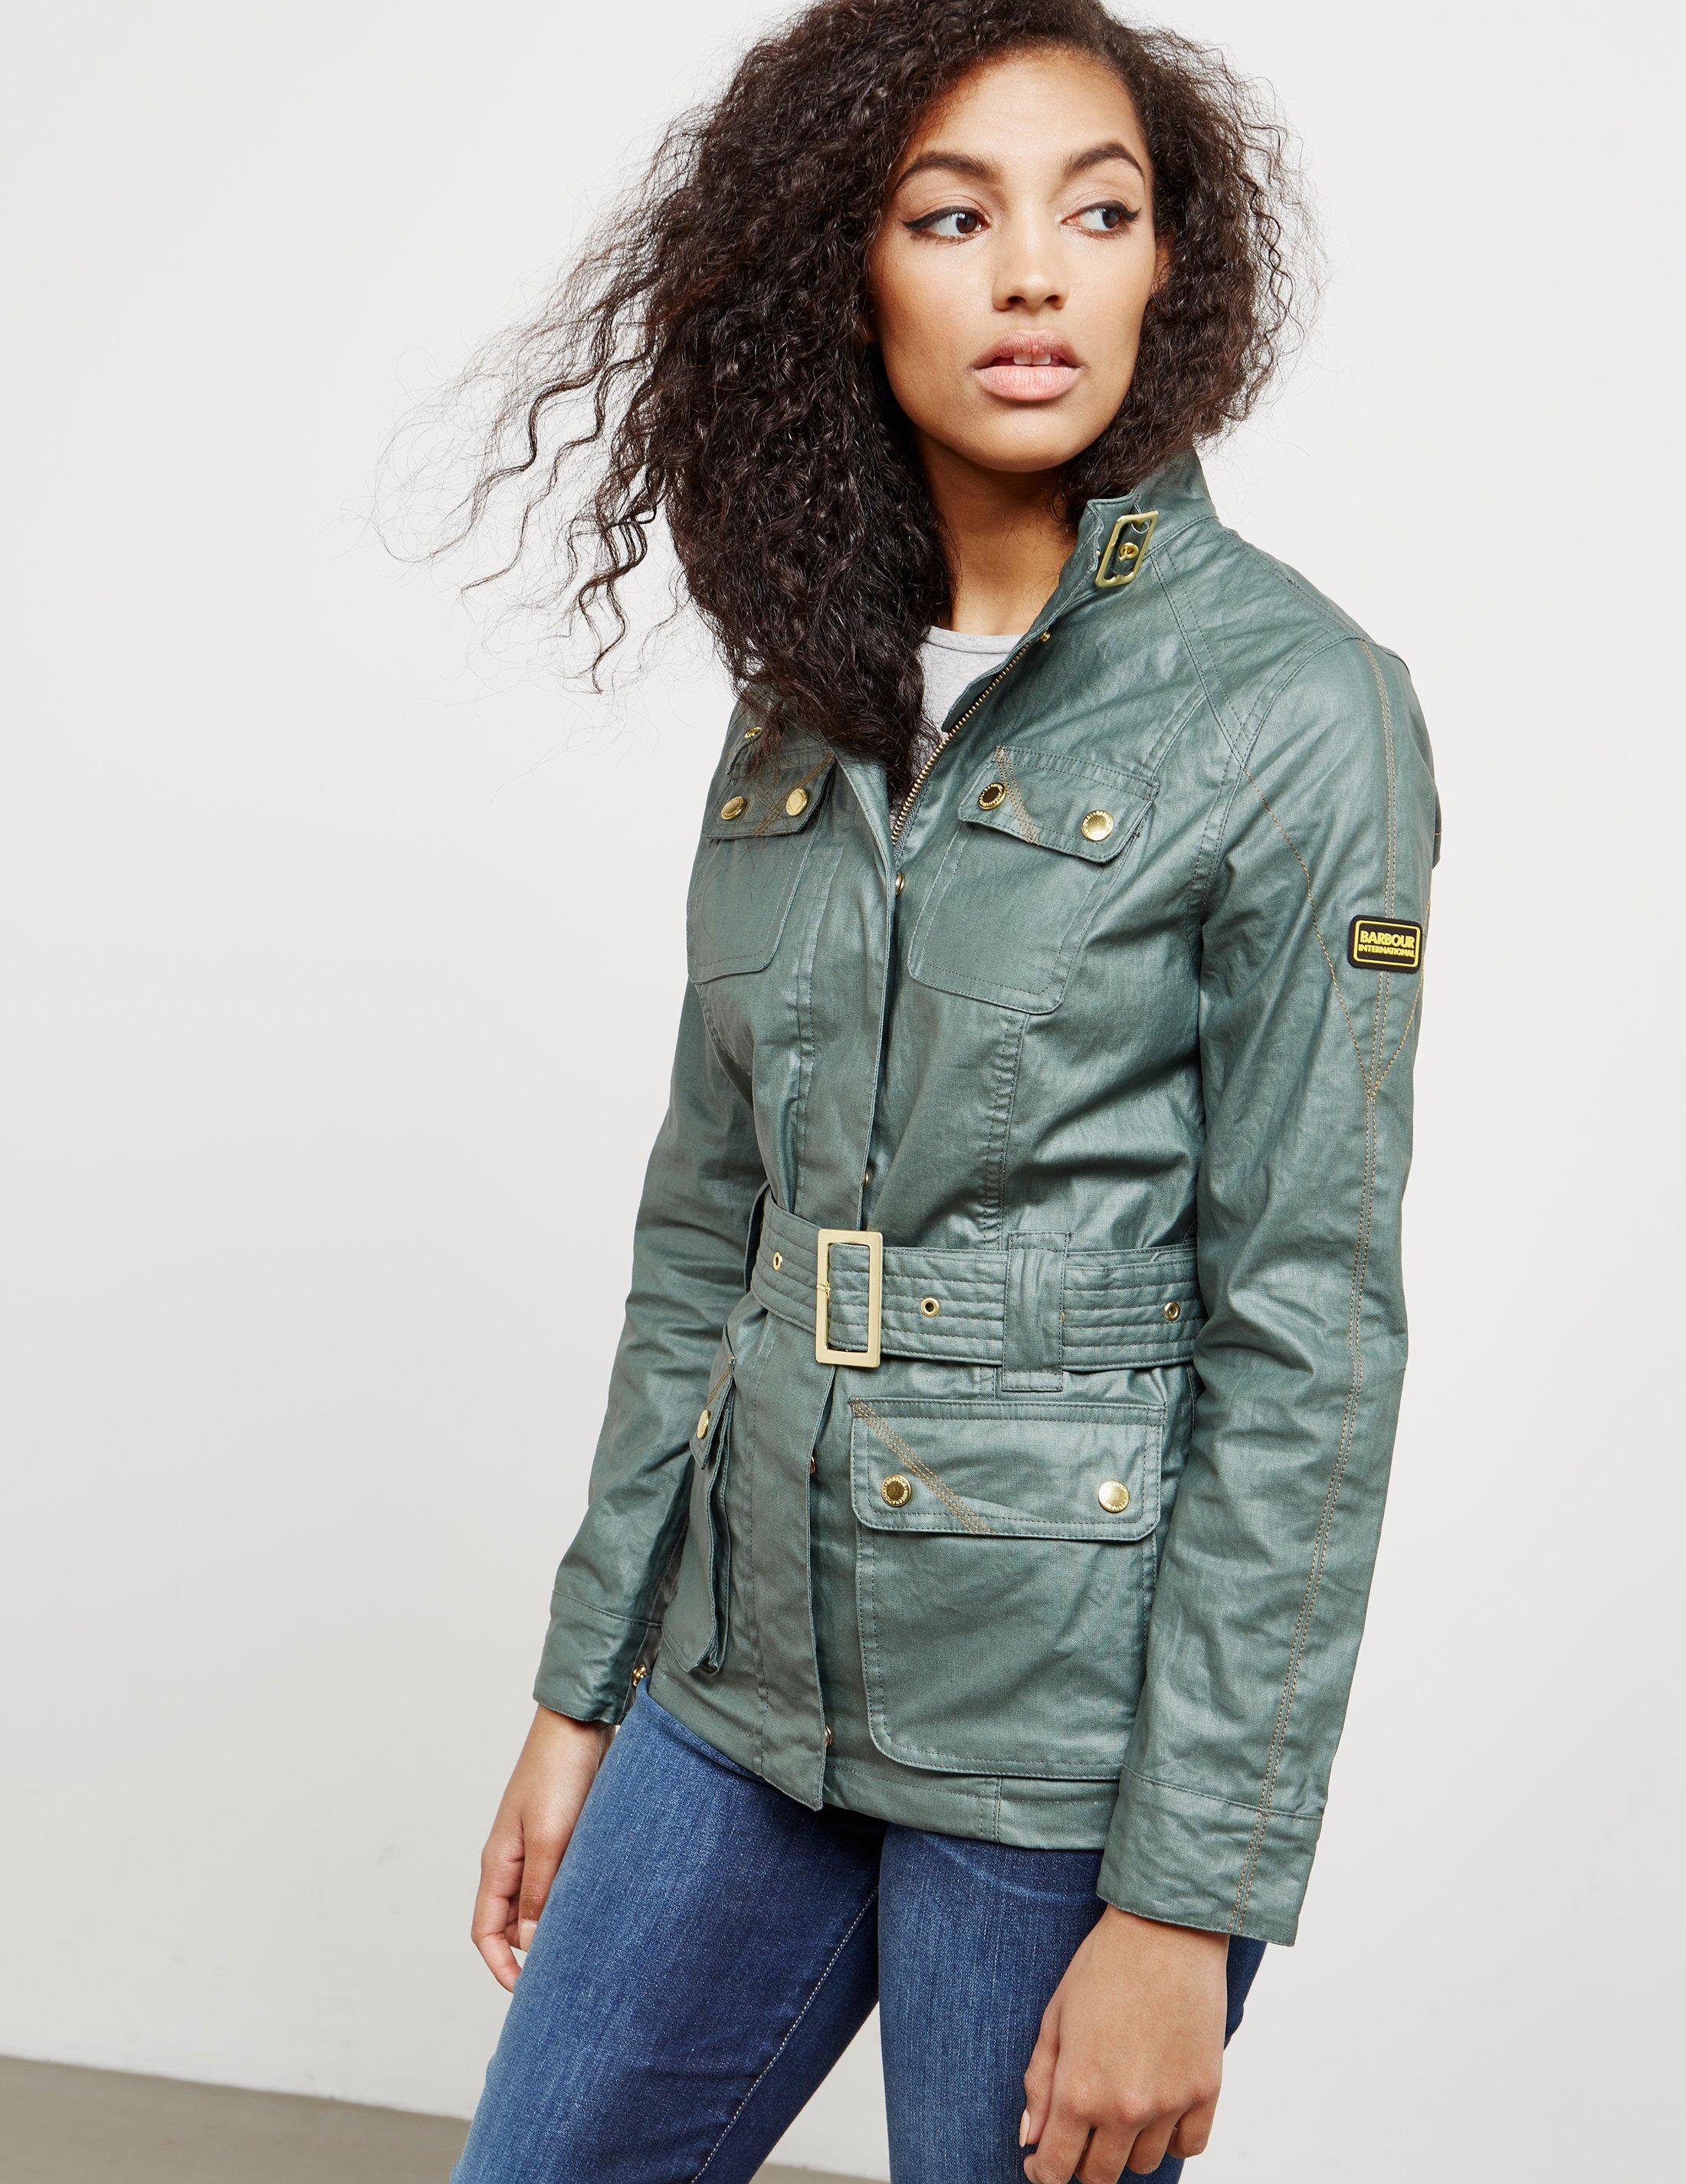 Green Barbour Jacket Womens Flash Sales, SAVE 39% - abaroadrive.com